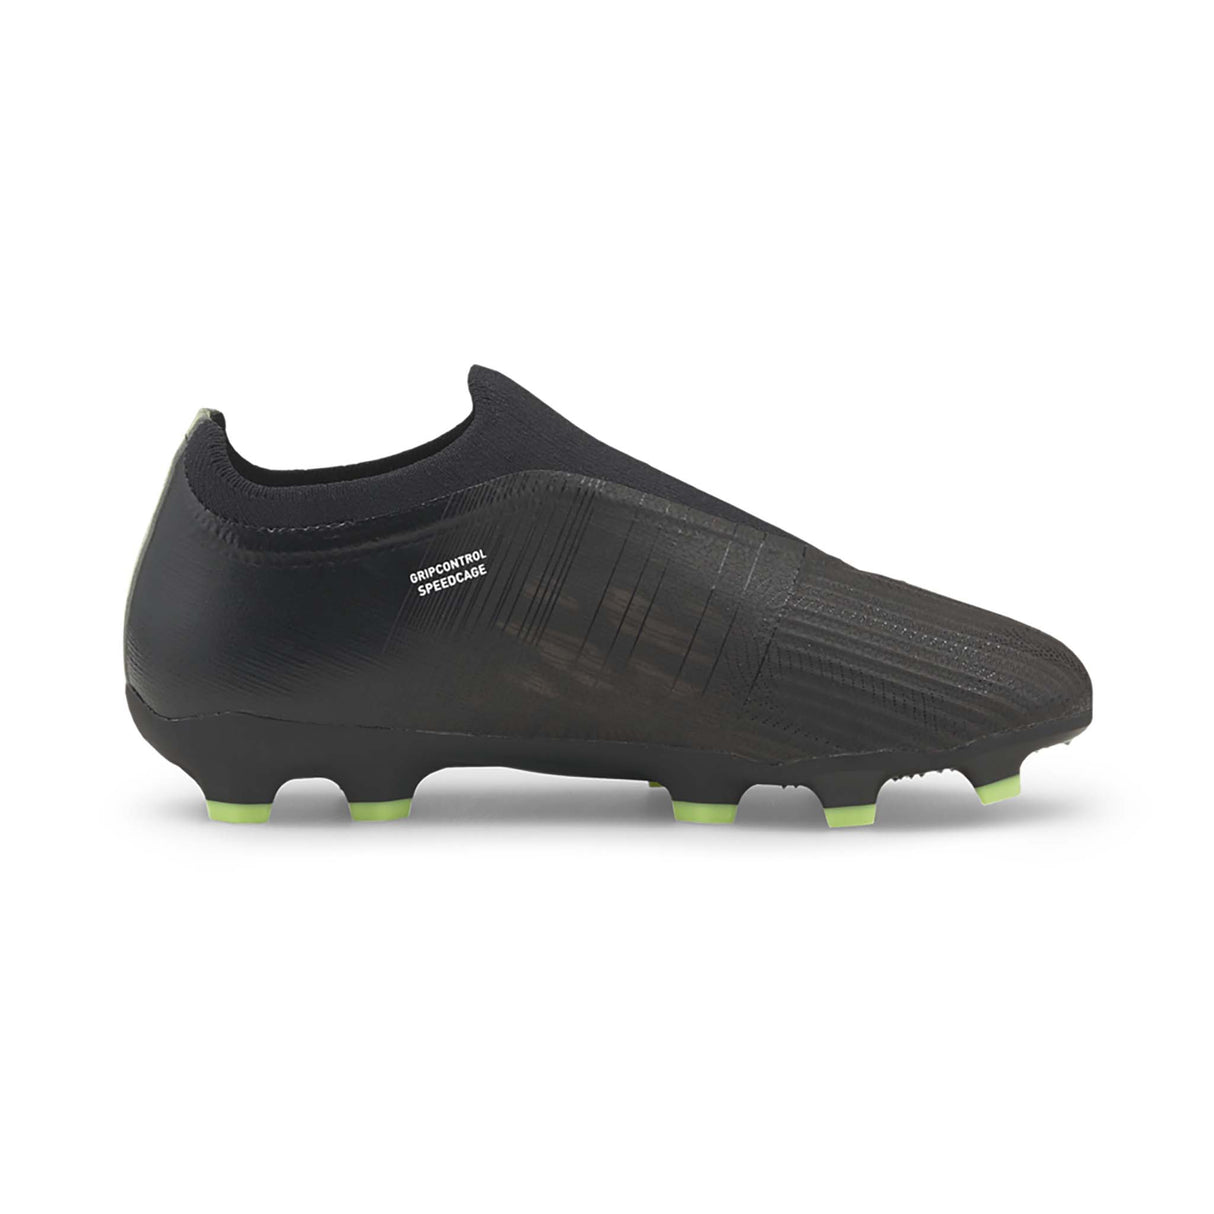 Puma Ultra 3.4 FG/AG souliers de soccer junior black white fizzy lateral